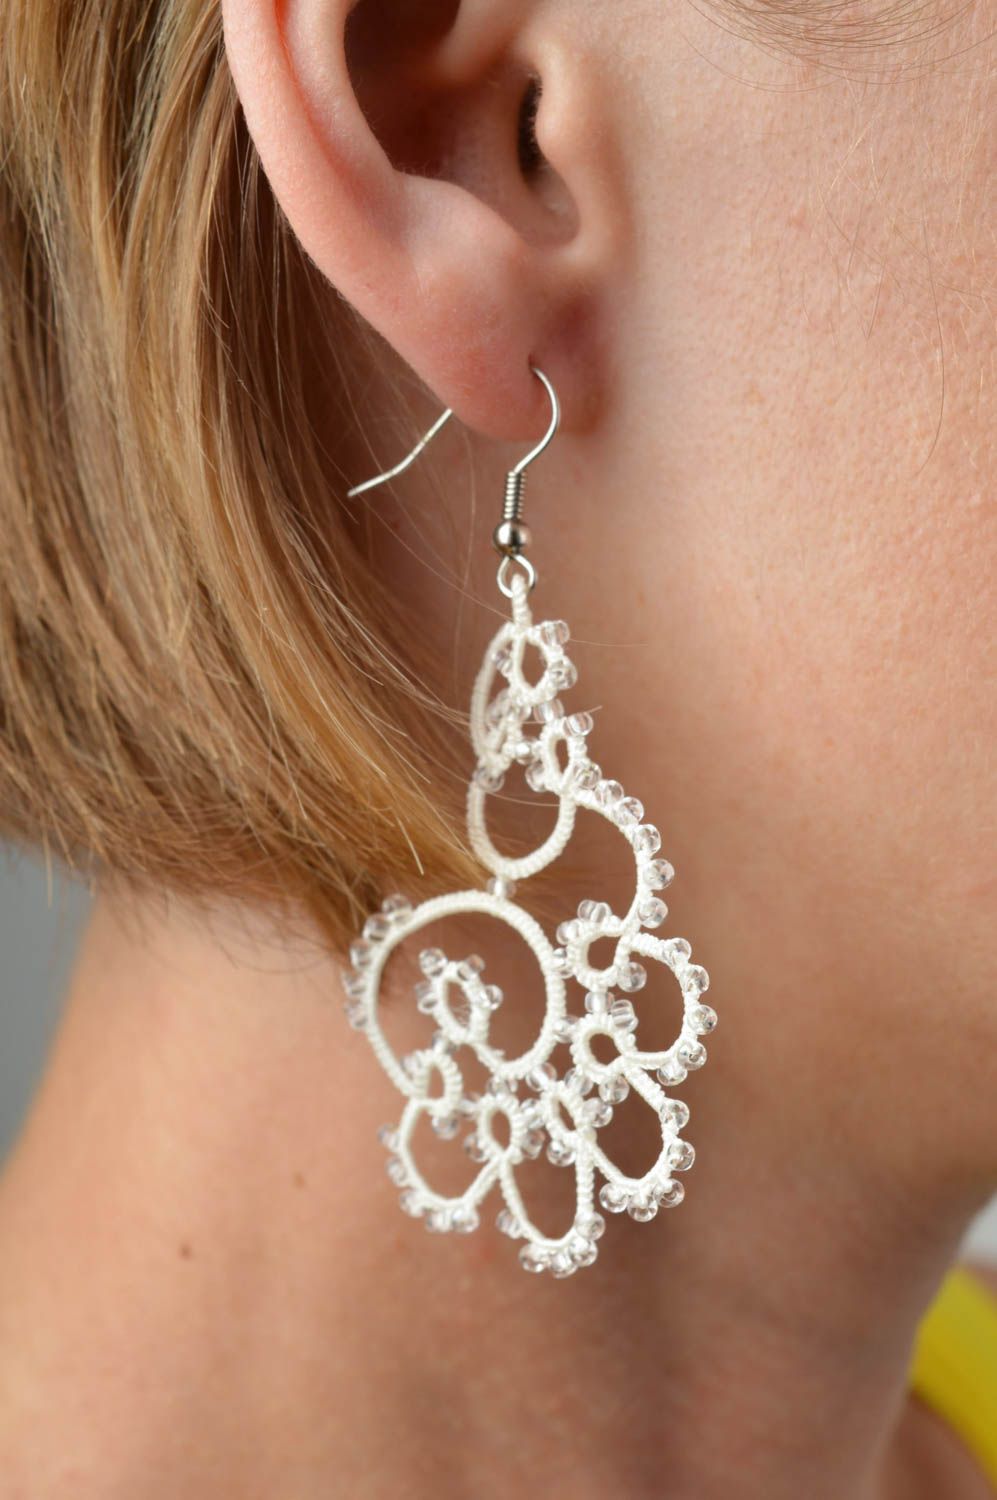 Handmade woven lace earrings artisan jewelry designs beautiful jewellery photo 1